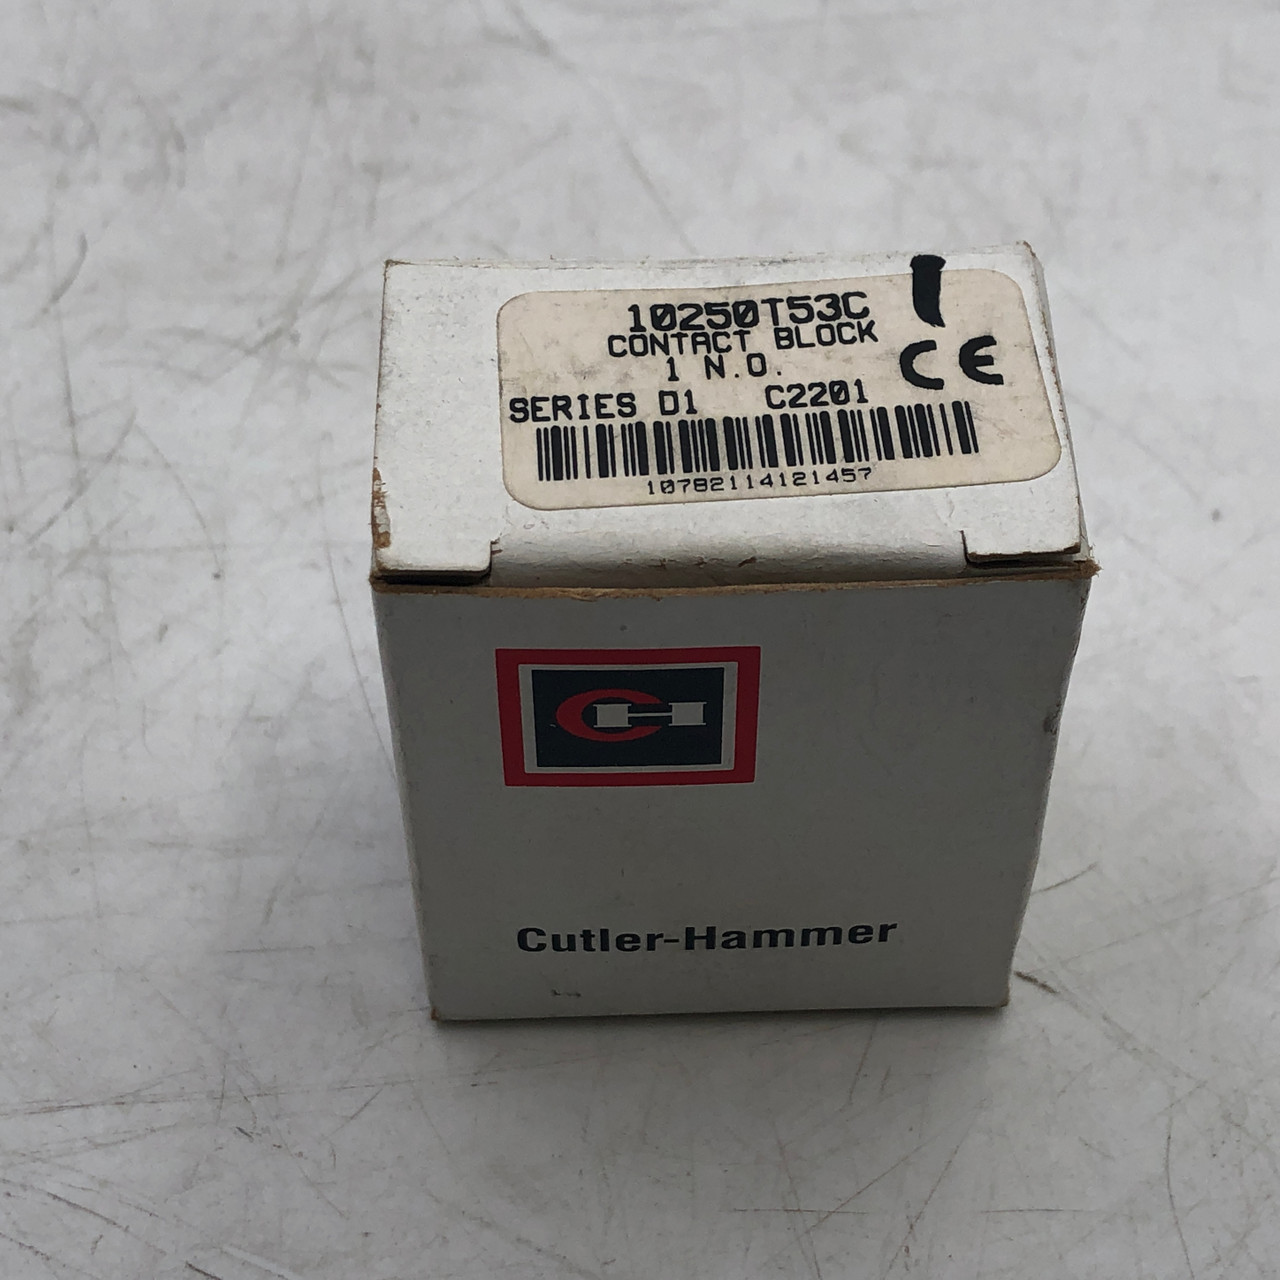 CUTLER HAMMER 10250T53C SERIES C1 1 N.O. CONTACT BLOCK - NEW